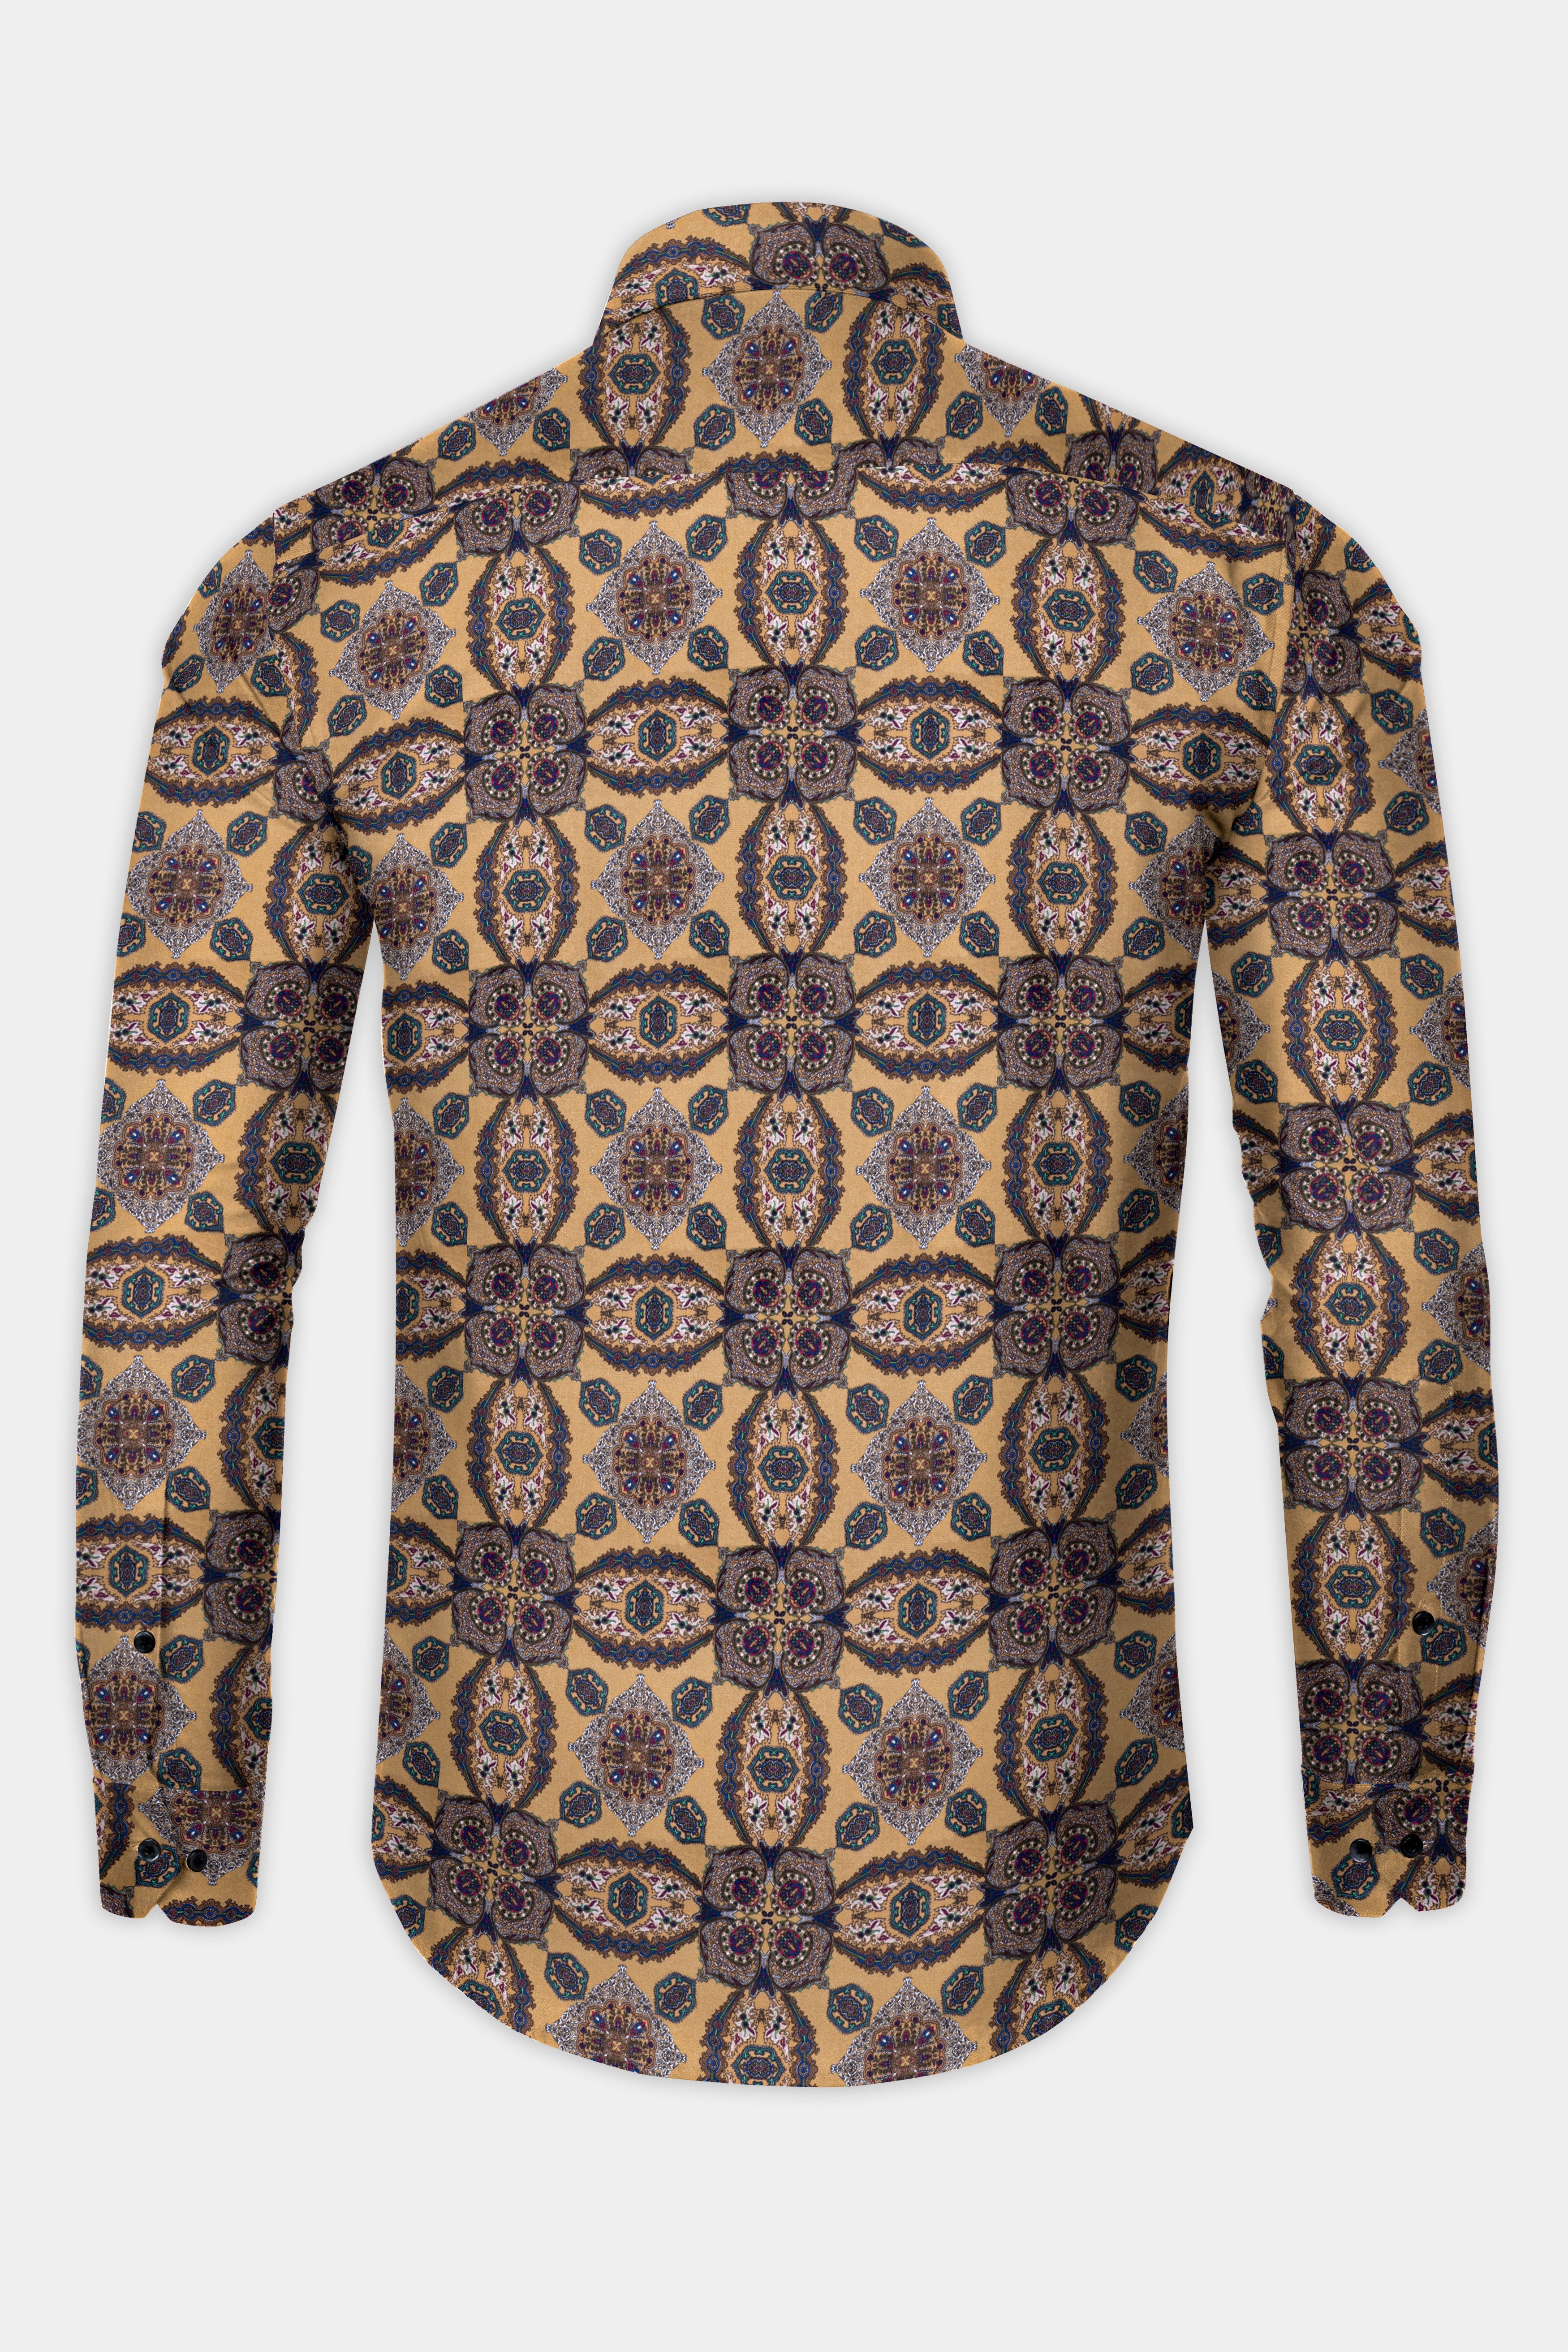 Driftwood Brown and Midnight blue Ajrakh geometric printed Premium Cotton Shirt